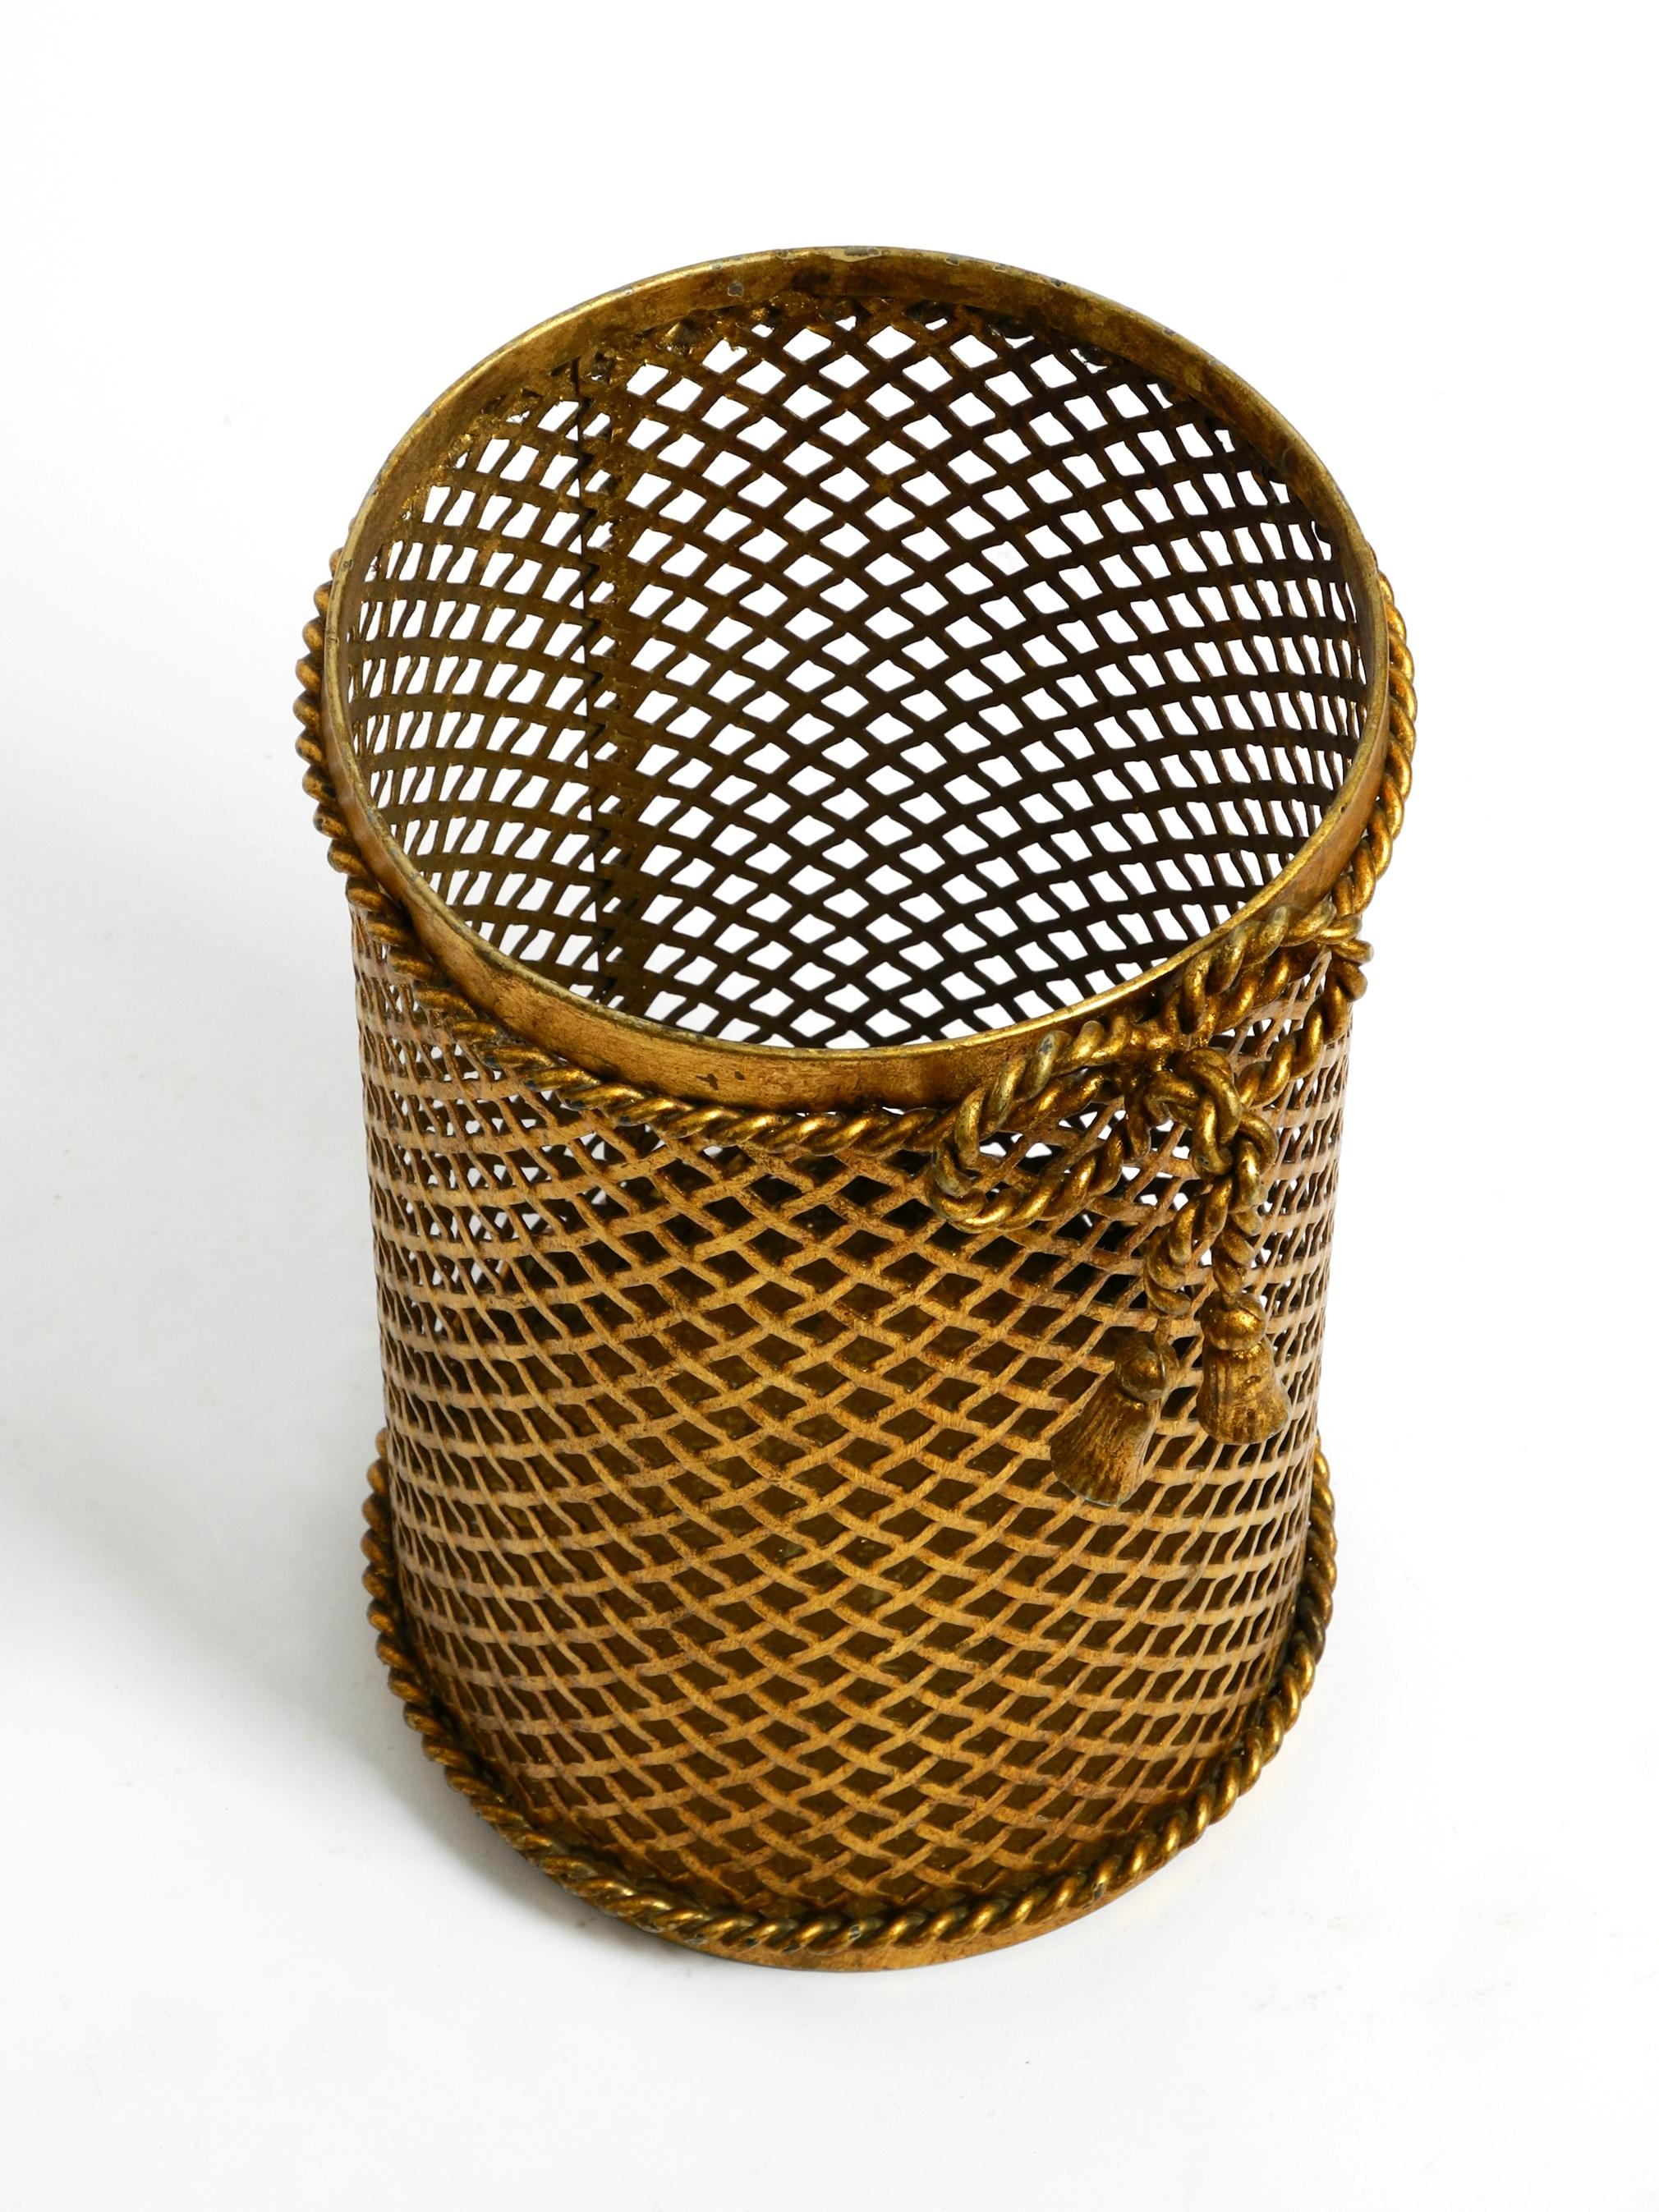 decorative waste paper baskets